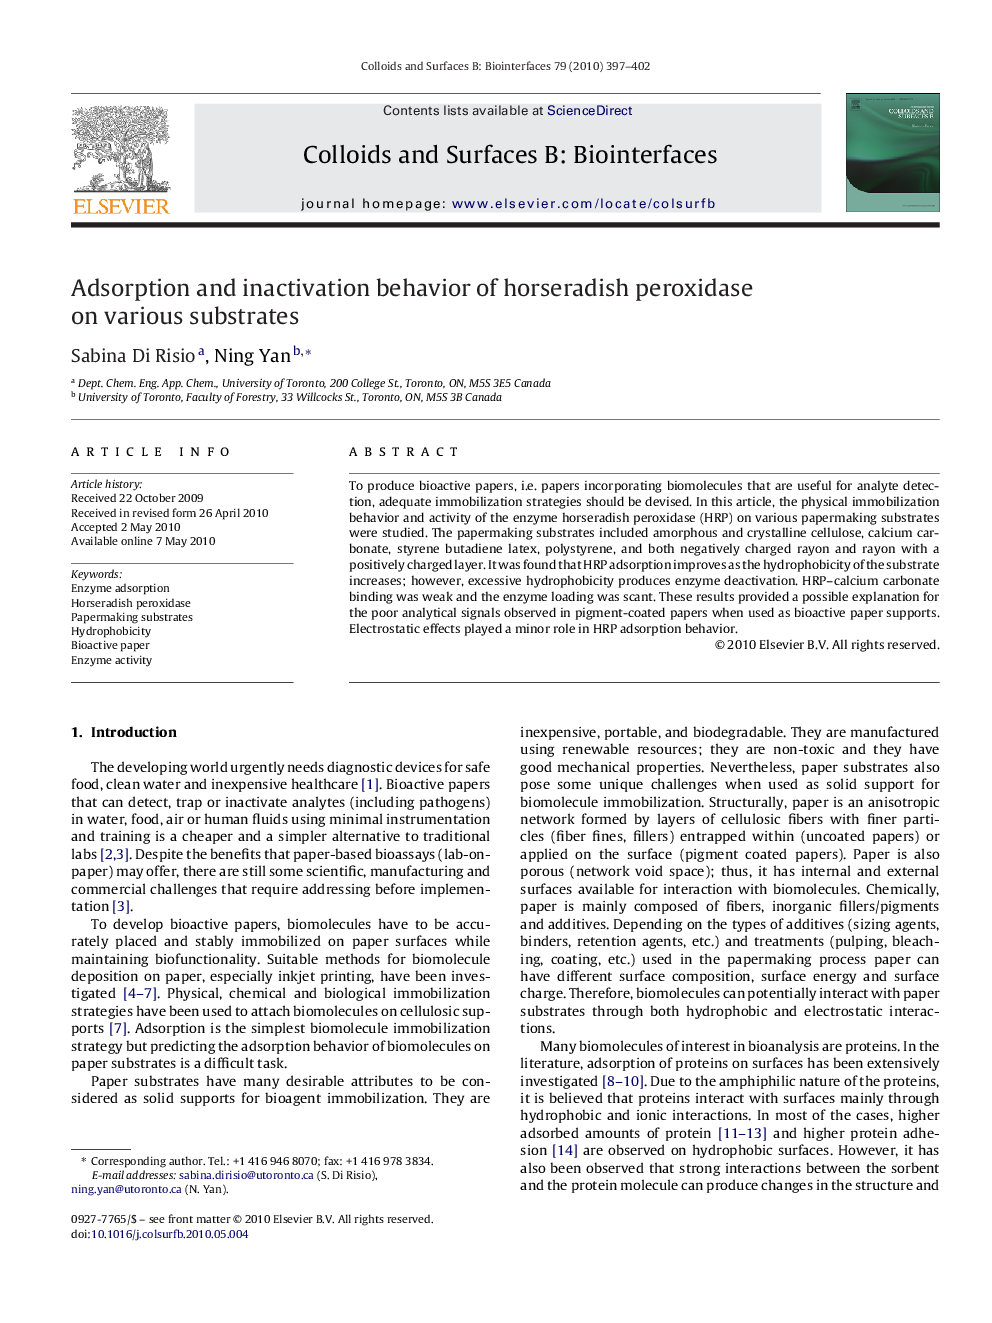 Adsorption and inactivation behavior of horseradish peroxidase on various substrates